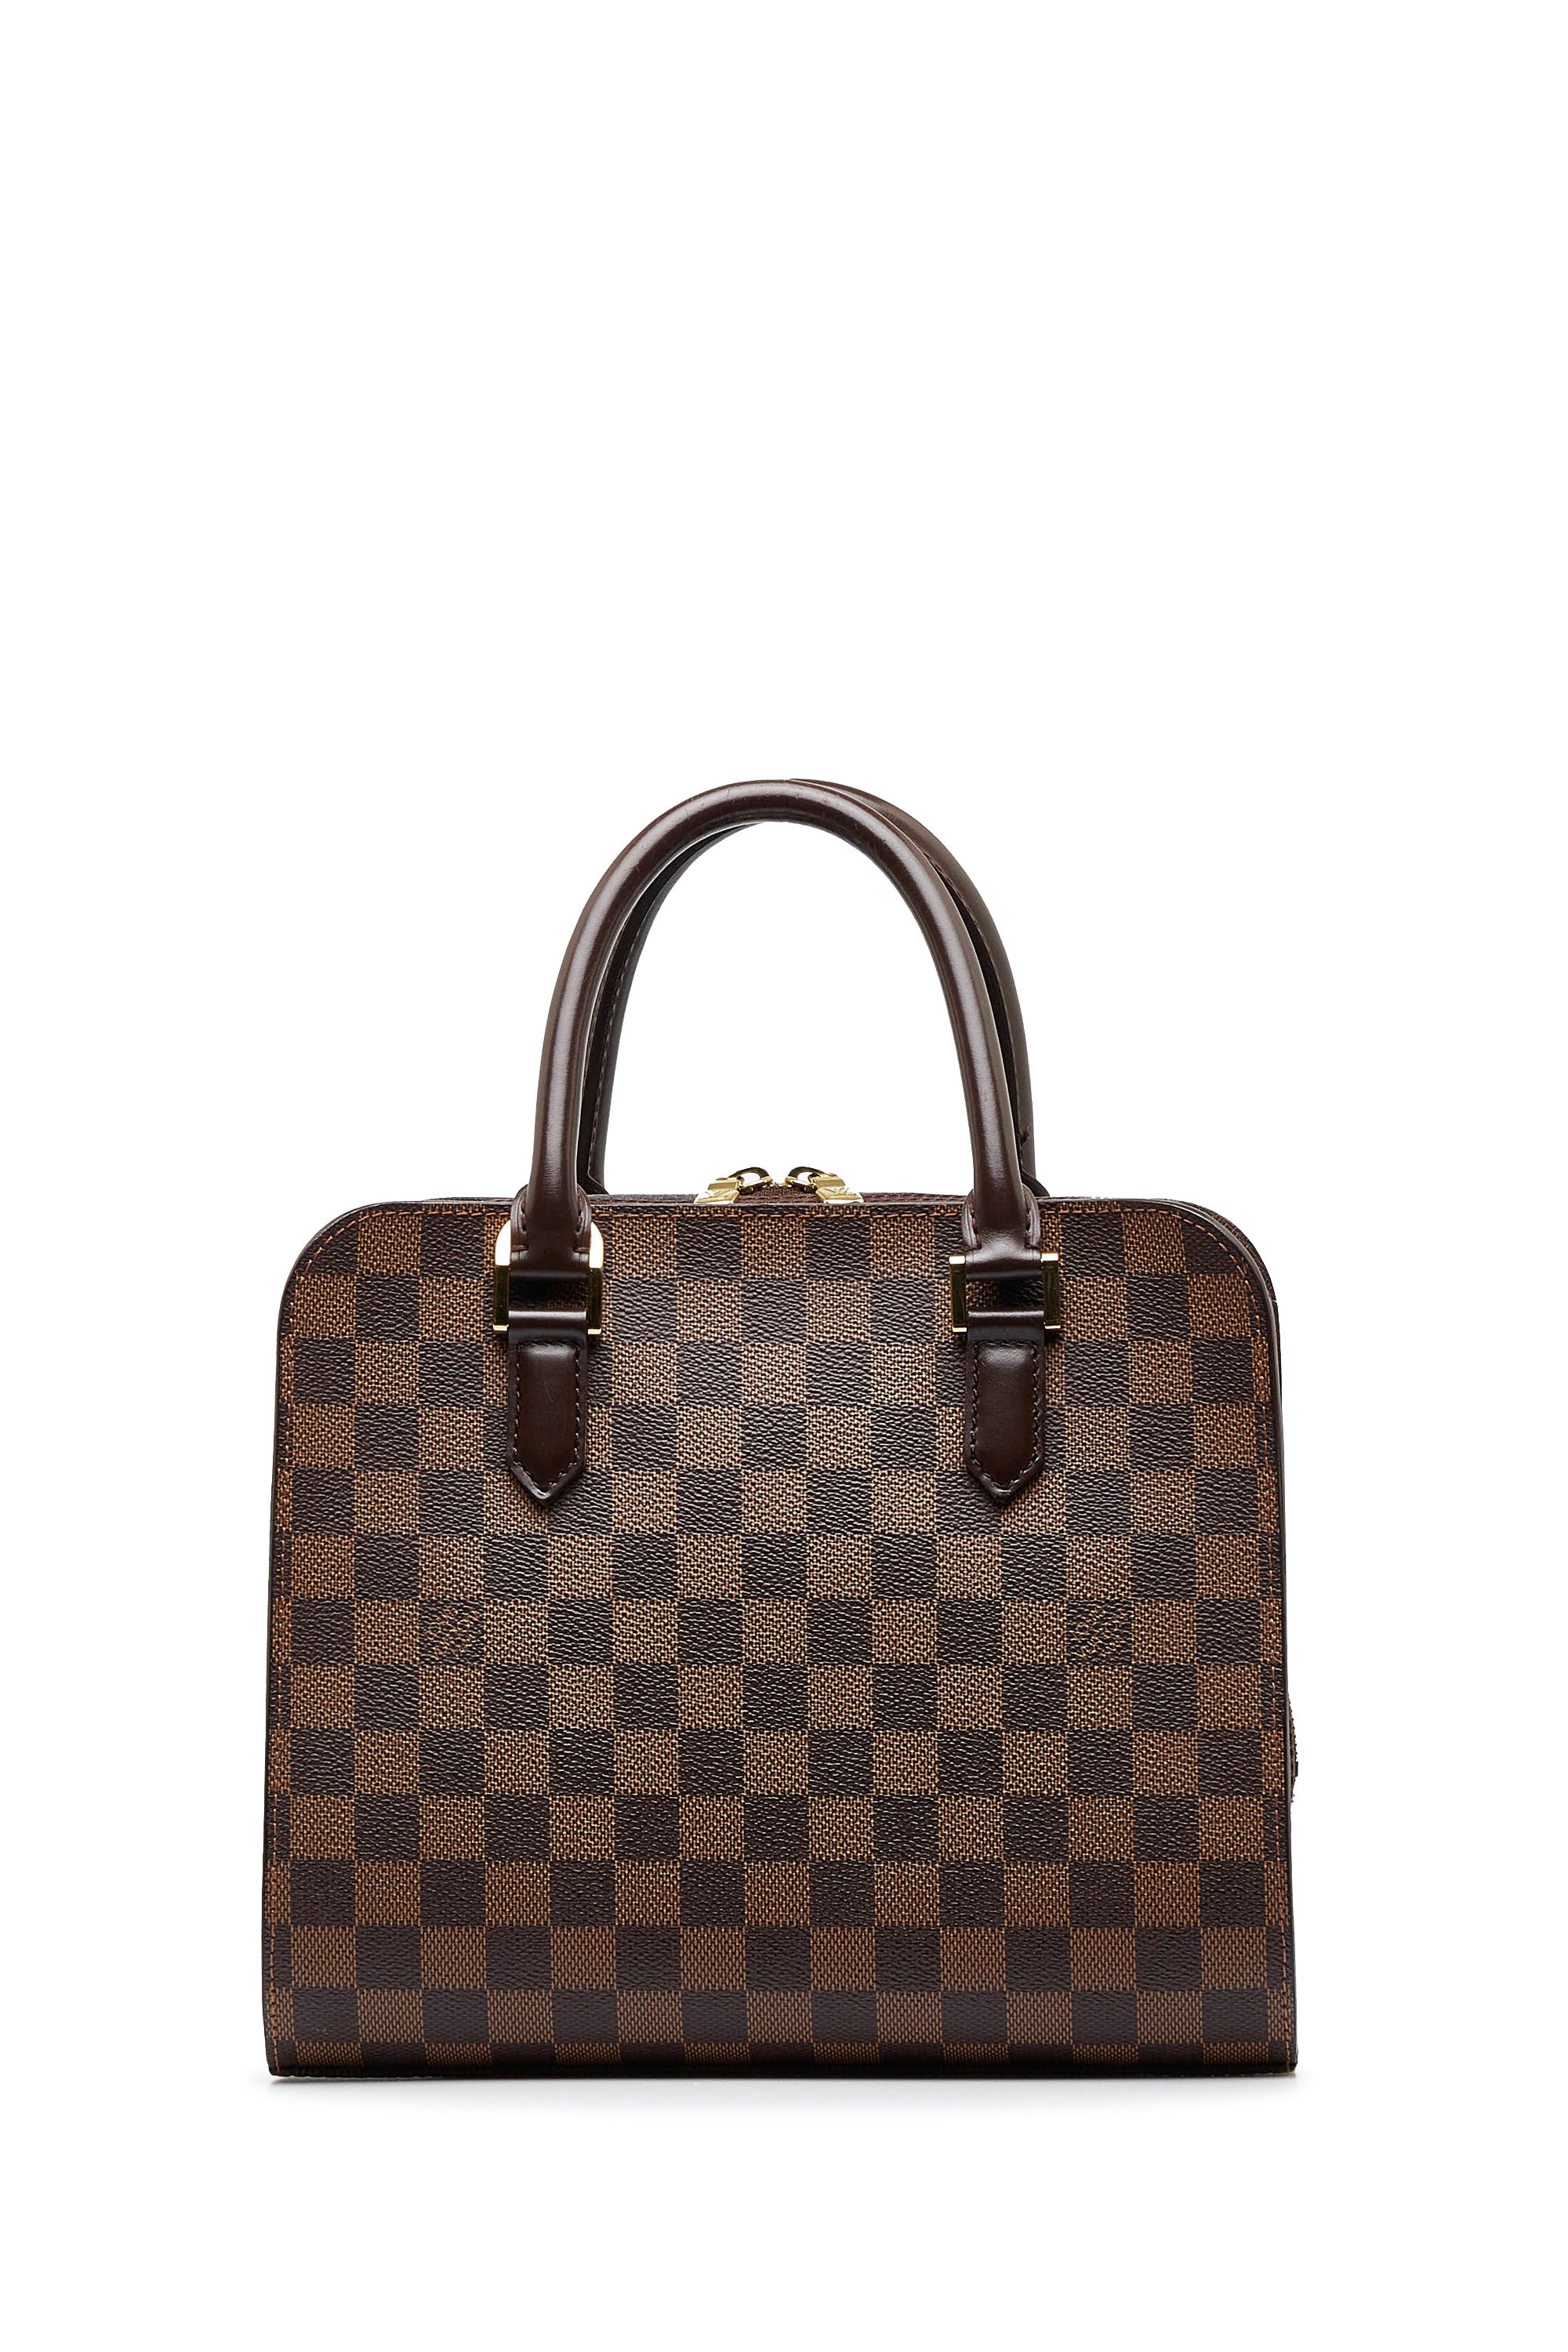 Pre-loved Louis Vuitton Vintage Damier Sauvage Tigre Handbag